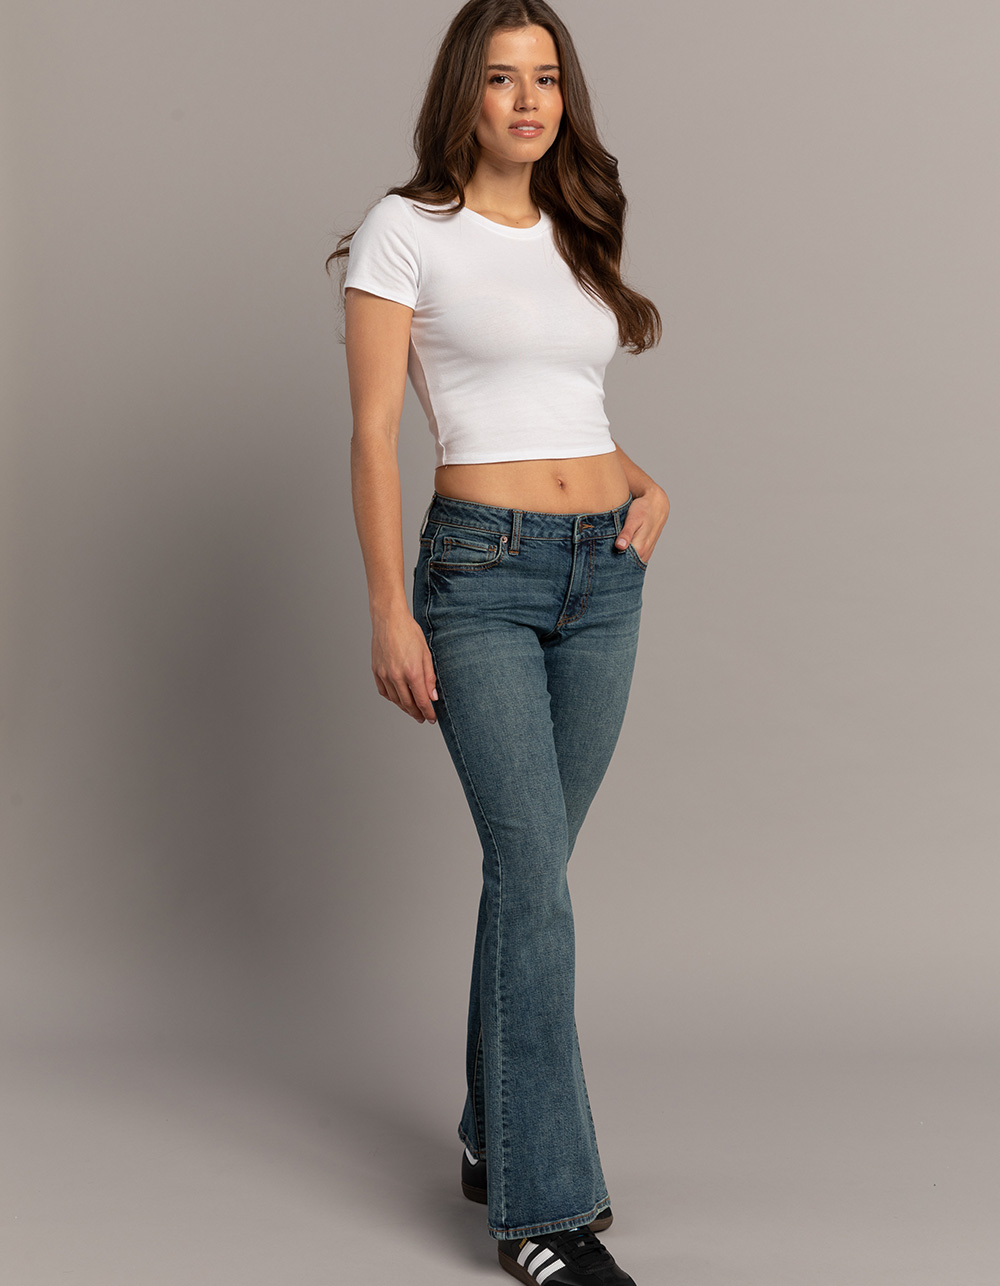 All Bottom wear for Women: Pants,Jeans & Skirts Online - RSM Silks